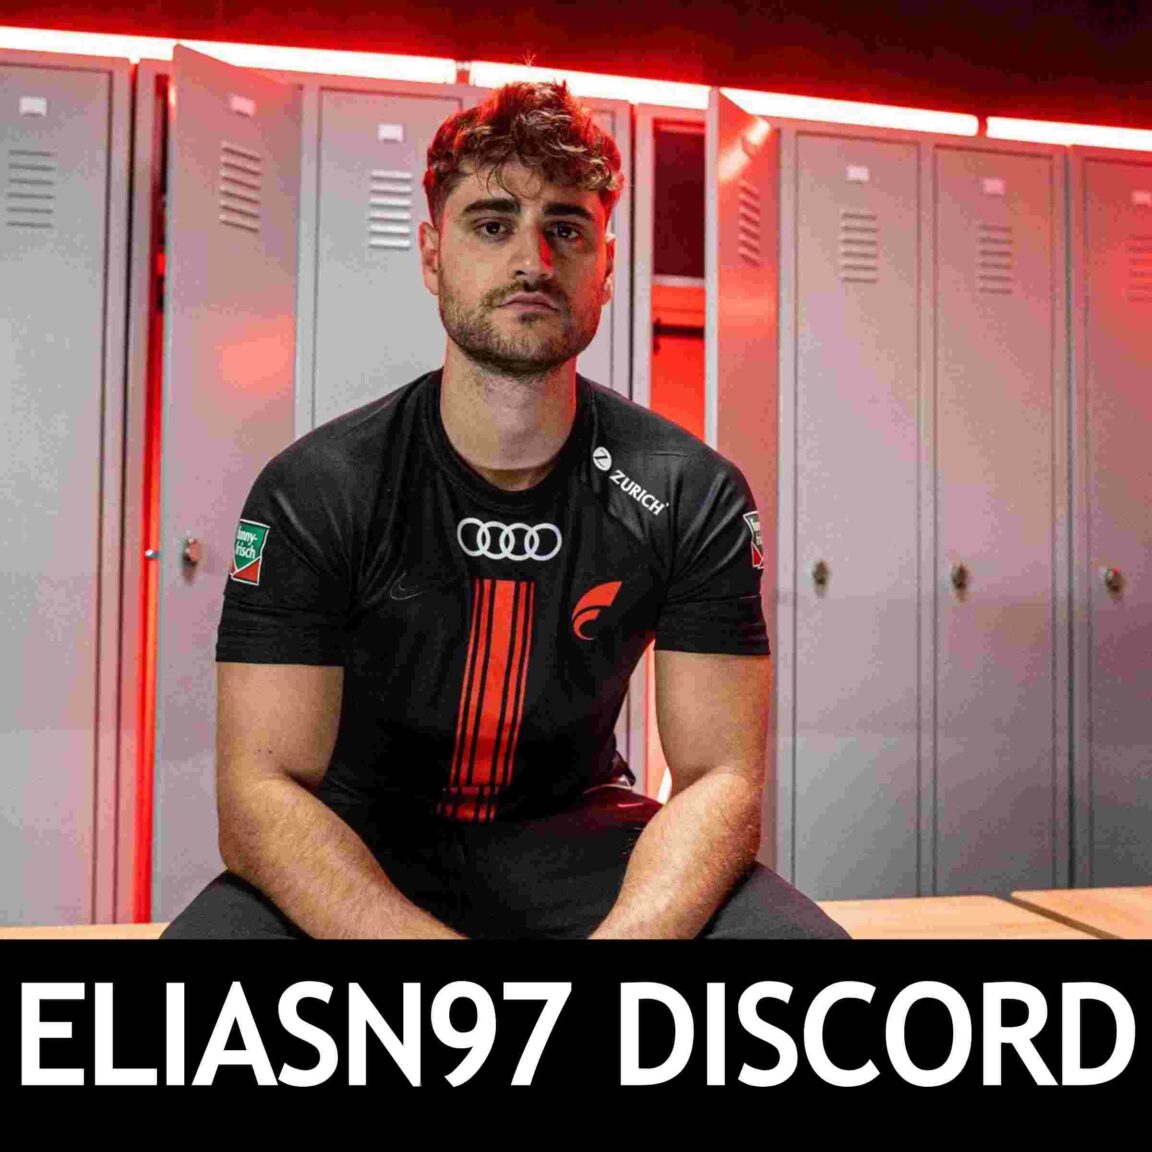 eliasn97 Discord